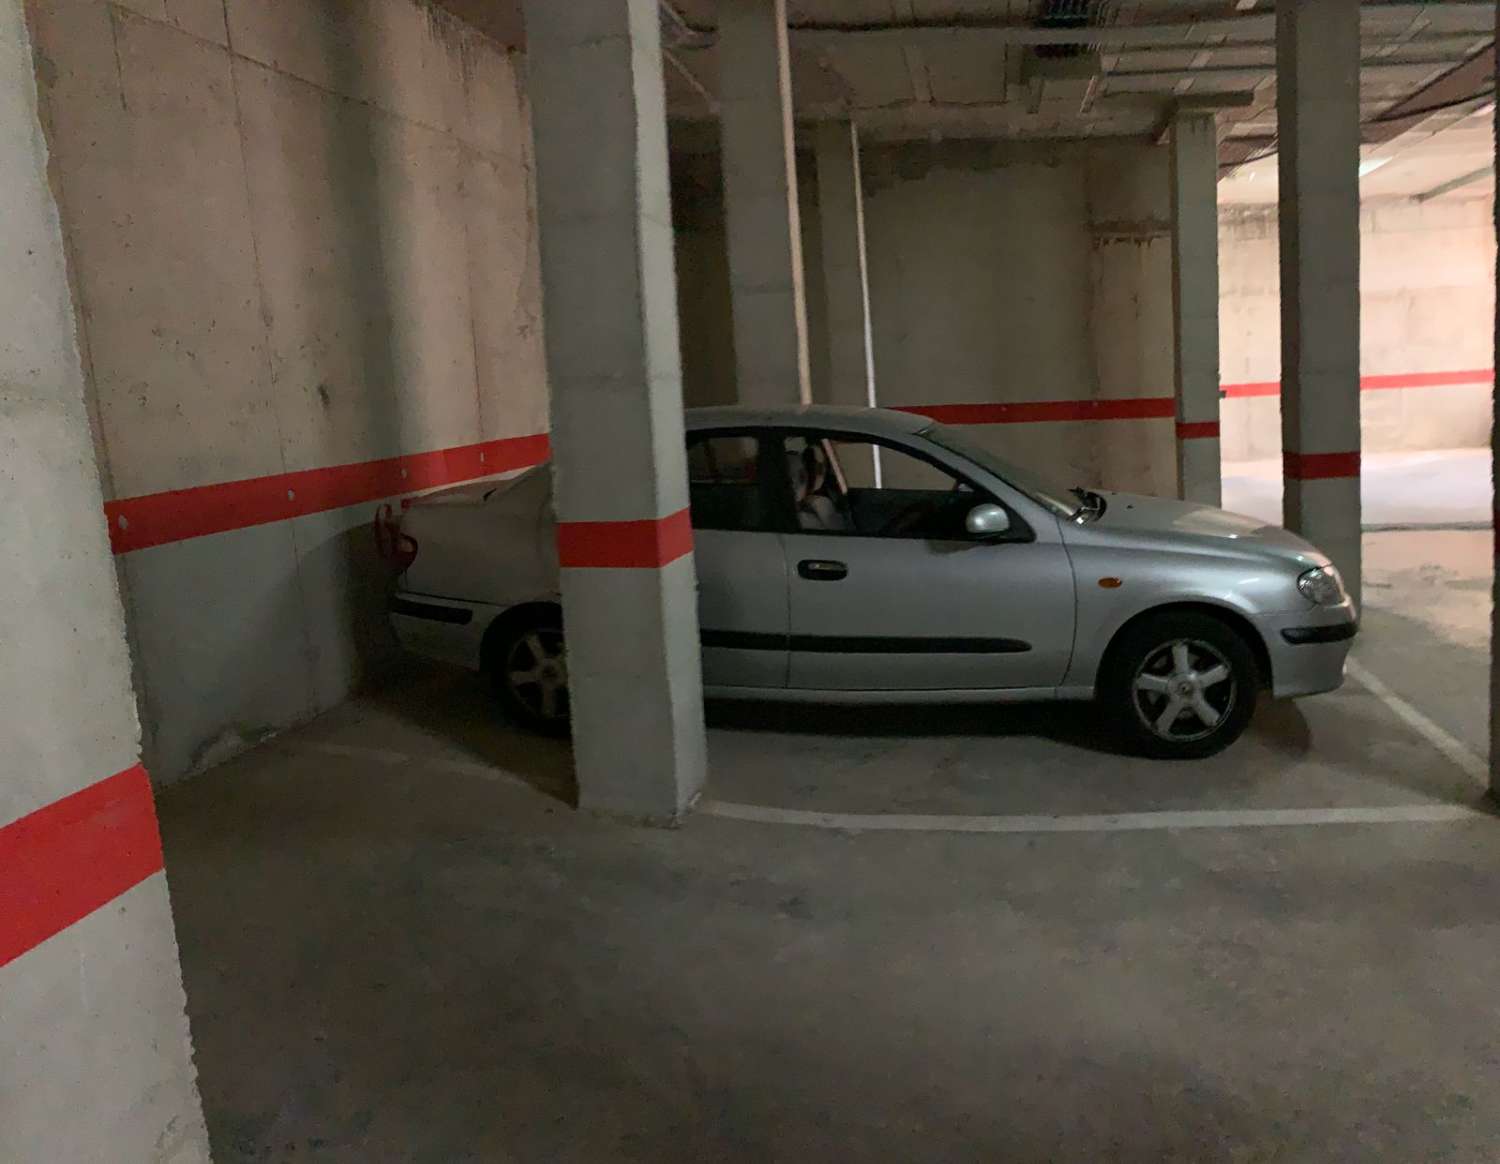 Underjordisk parkeringsplass